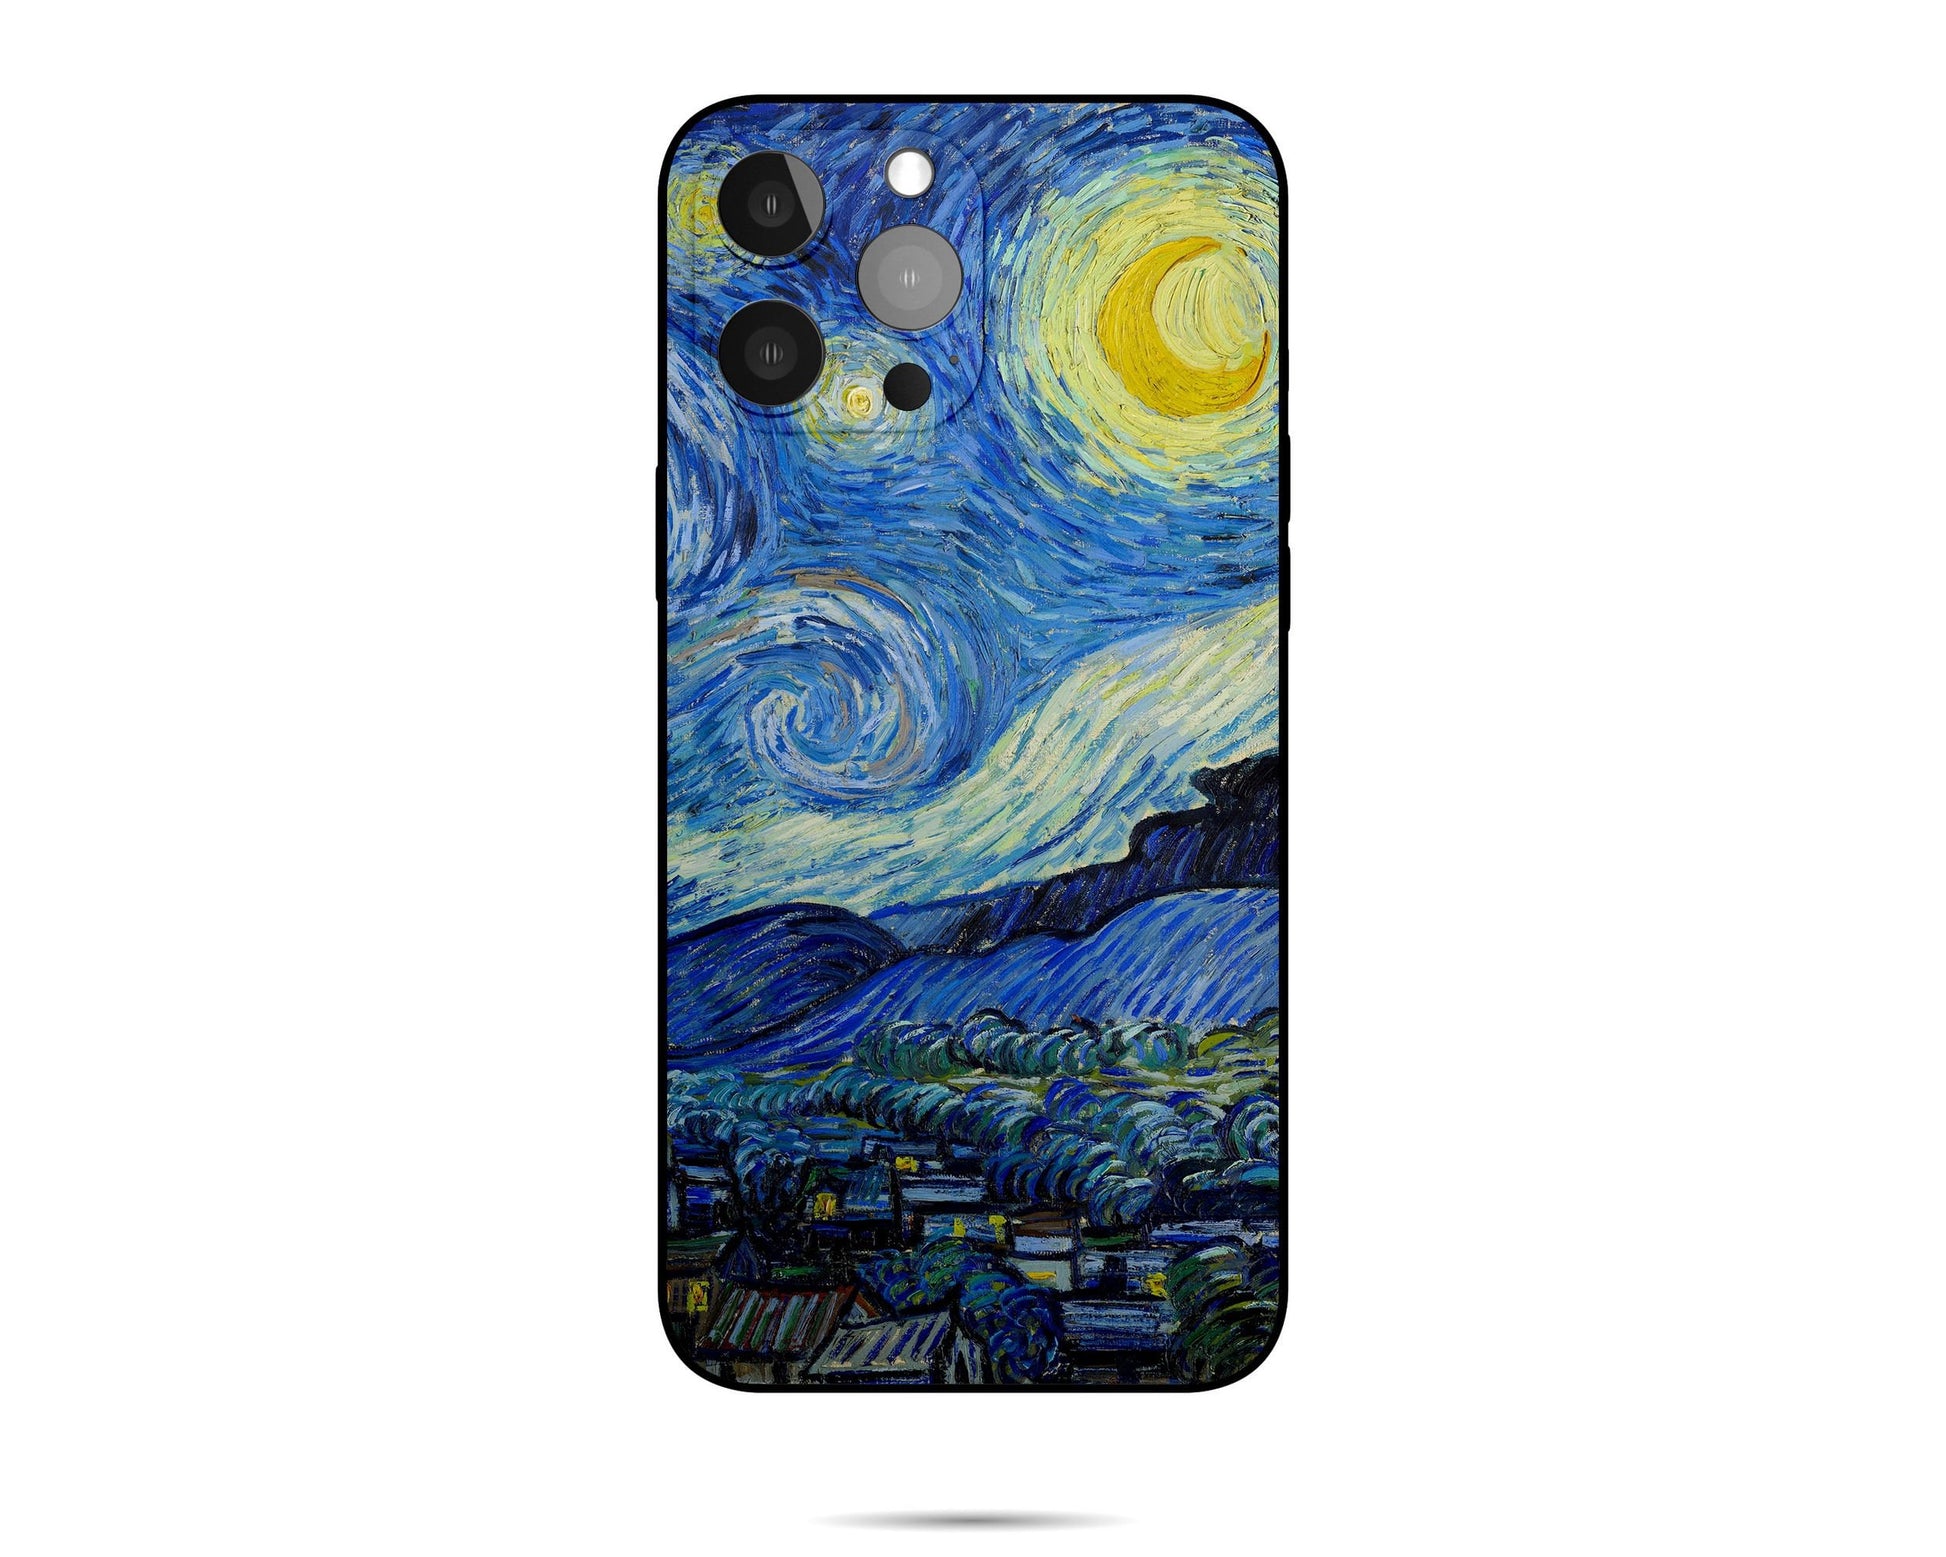 Vincent Van Gogh Starry Night Iphone Cover, Iphone 8 Plus Case, Iphone Xs, Iphone 8 Plus Case Art, Vivid Colors, Designer Iphone 8 Plus Case